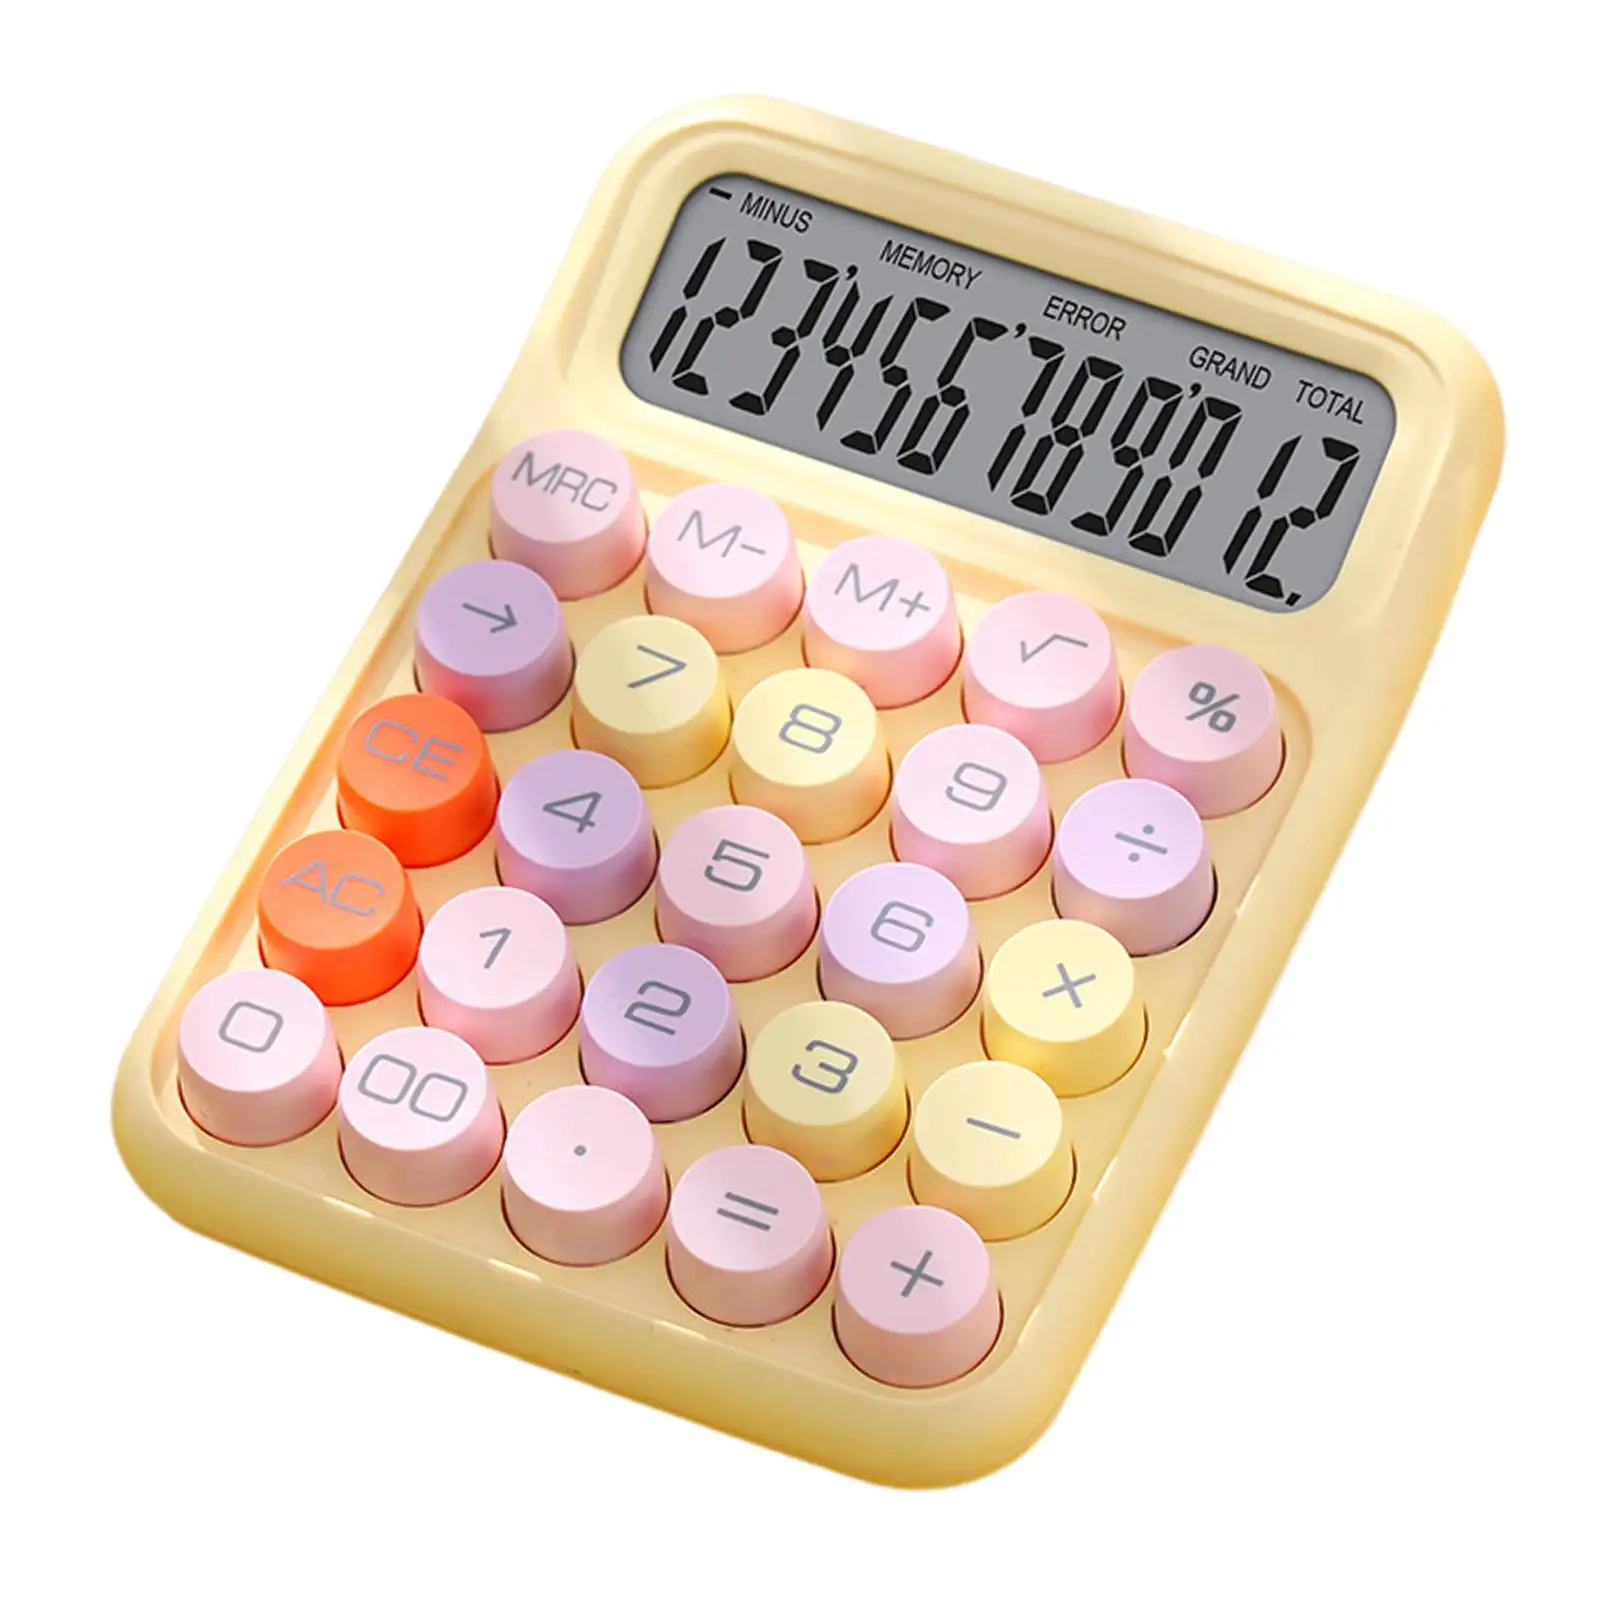 12Digit Calculator with Non Slip Mat Mechanical Button Calculator Desktop Calculator Office Calculator for Business Class Office